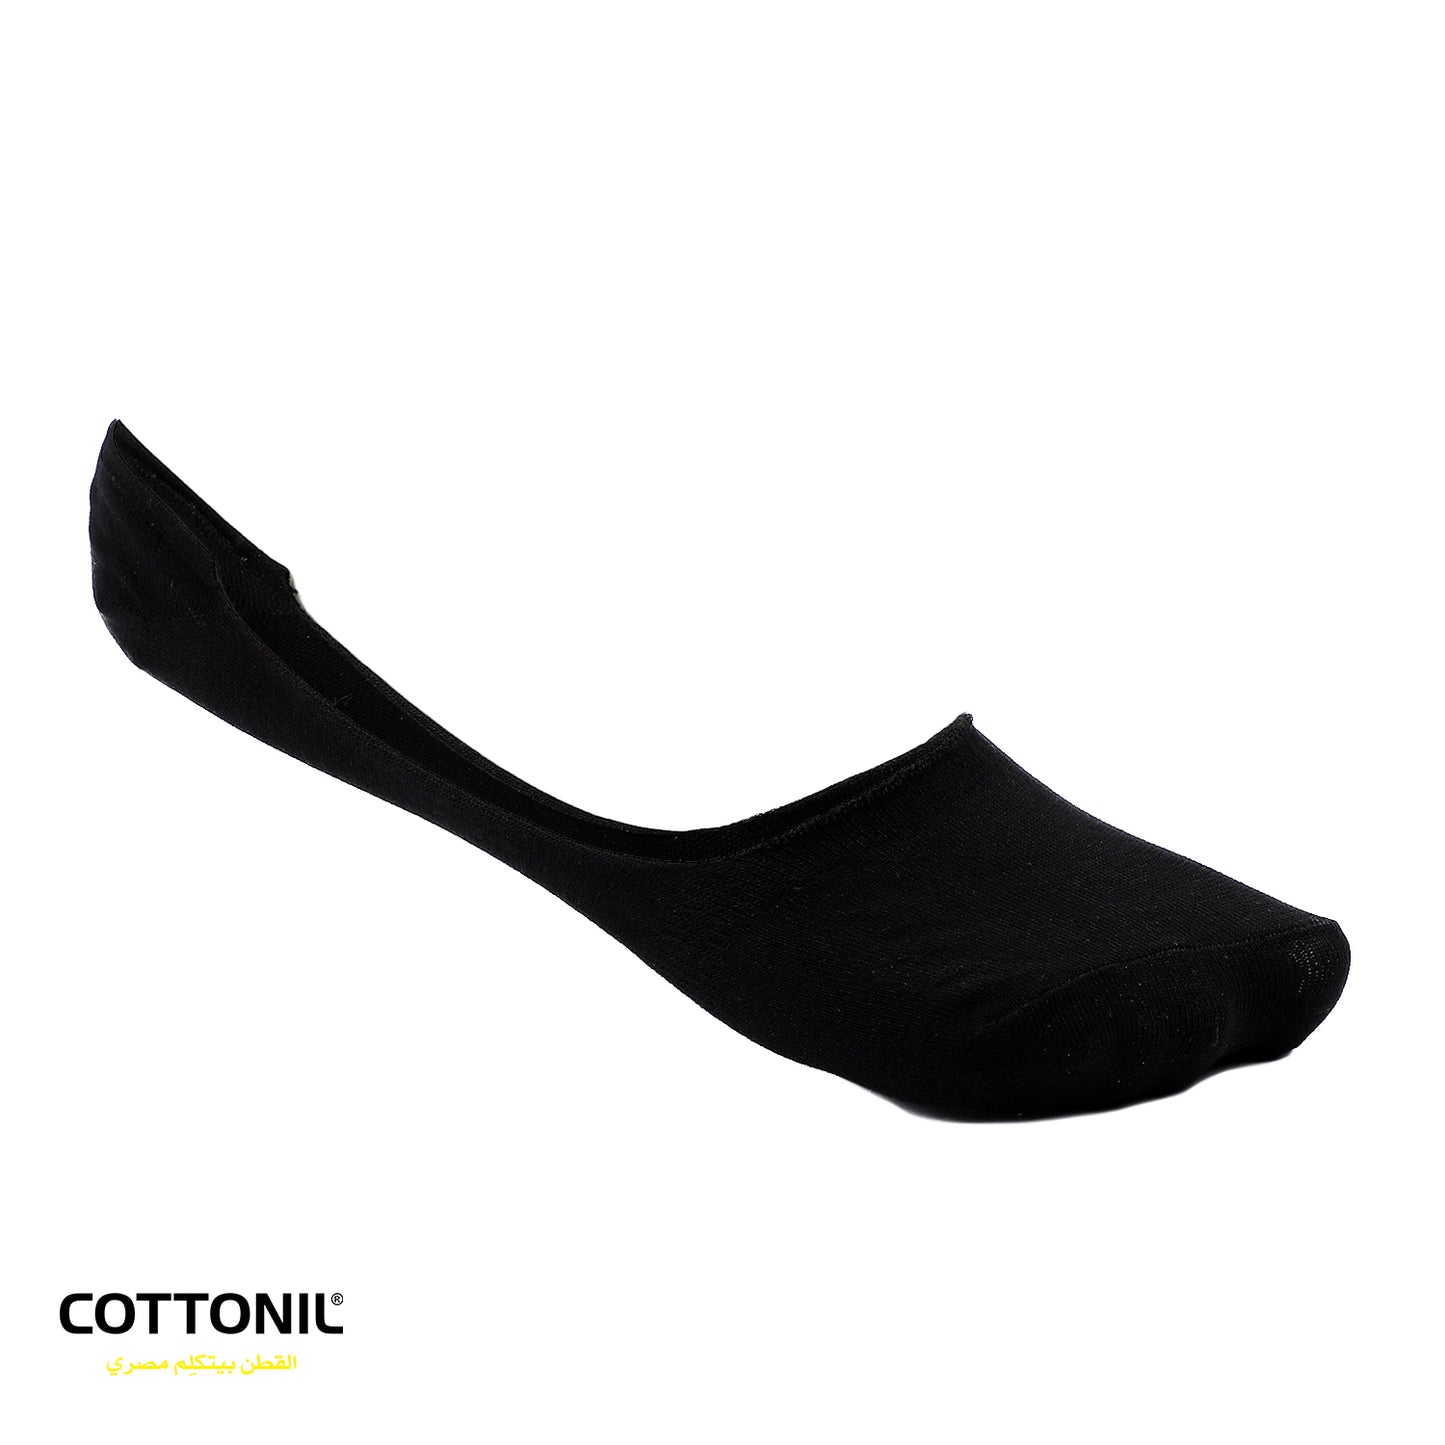 Cotton Plain foot Socks "Unsex XL" - Pack Of 6